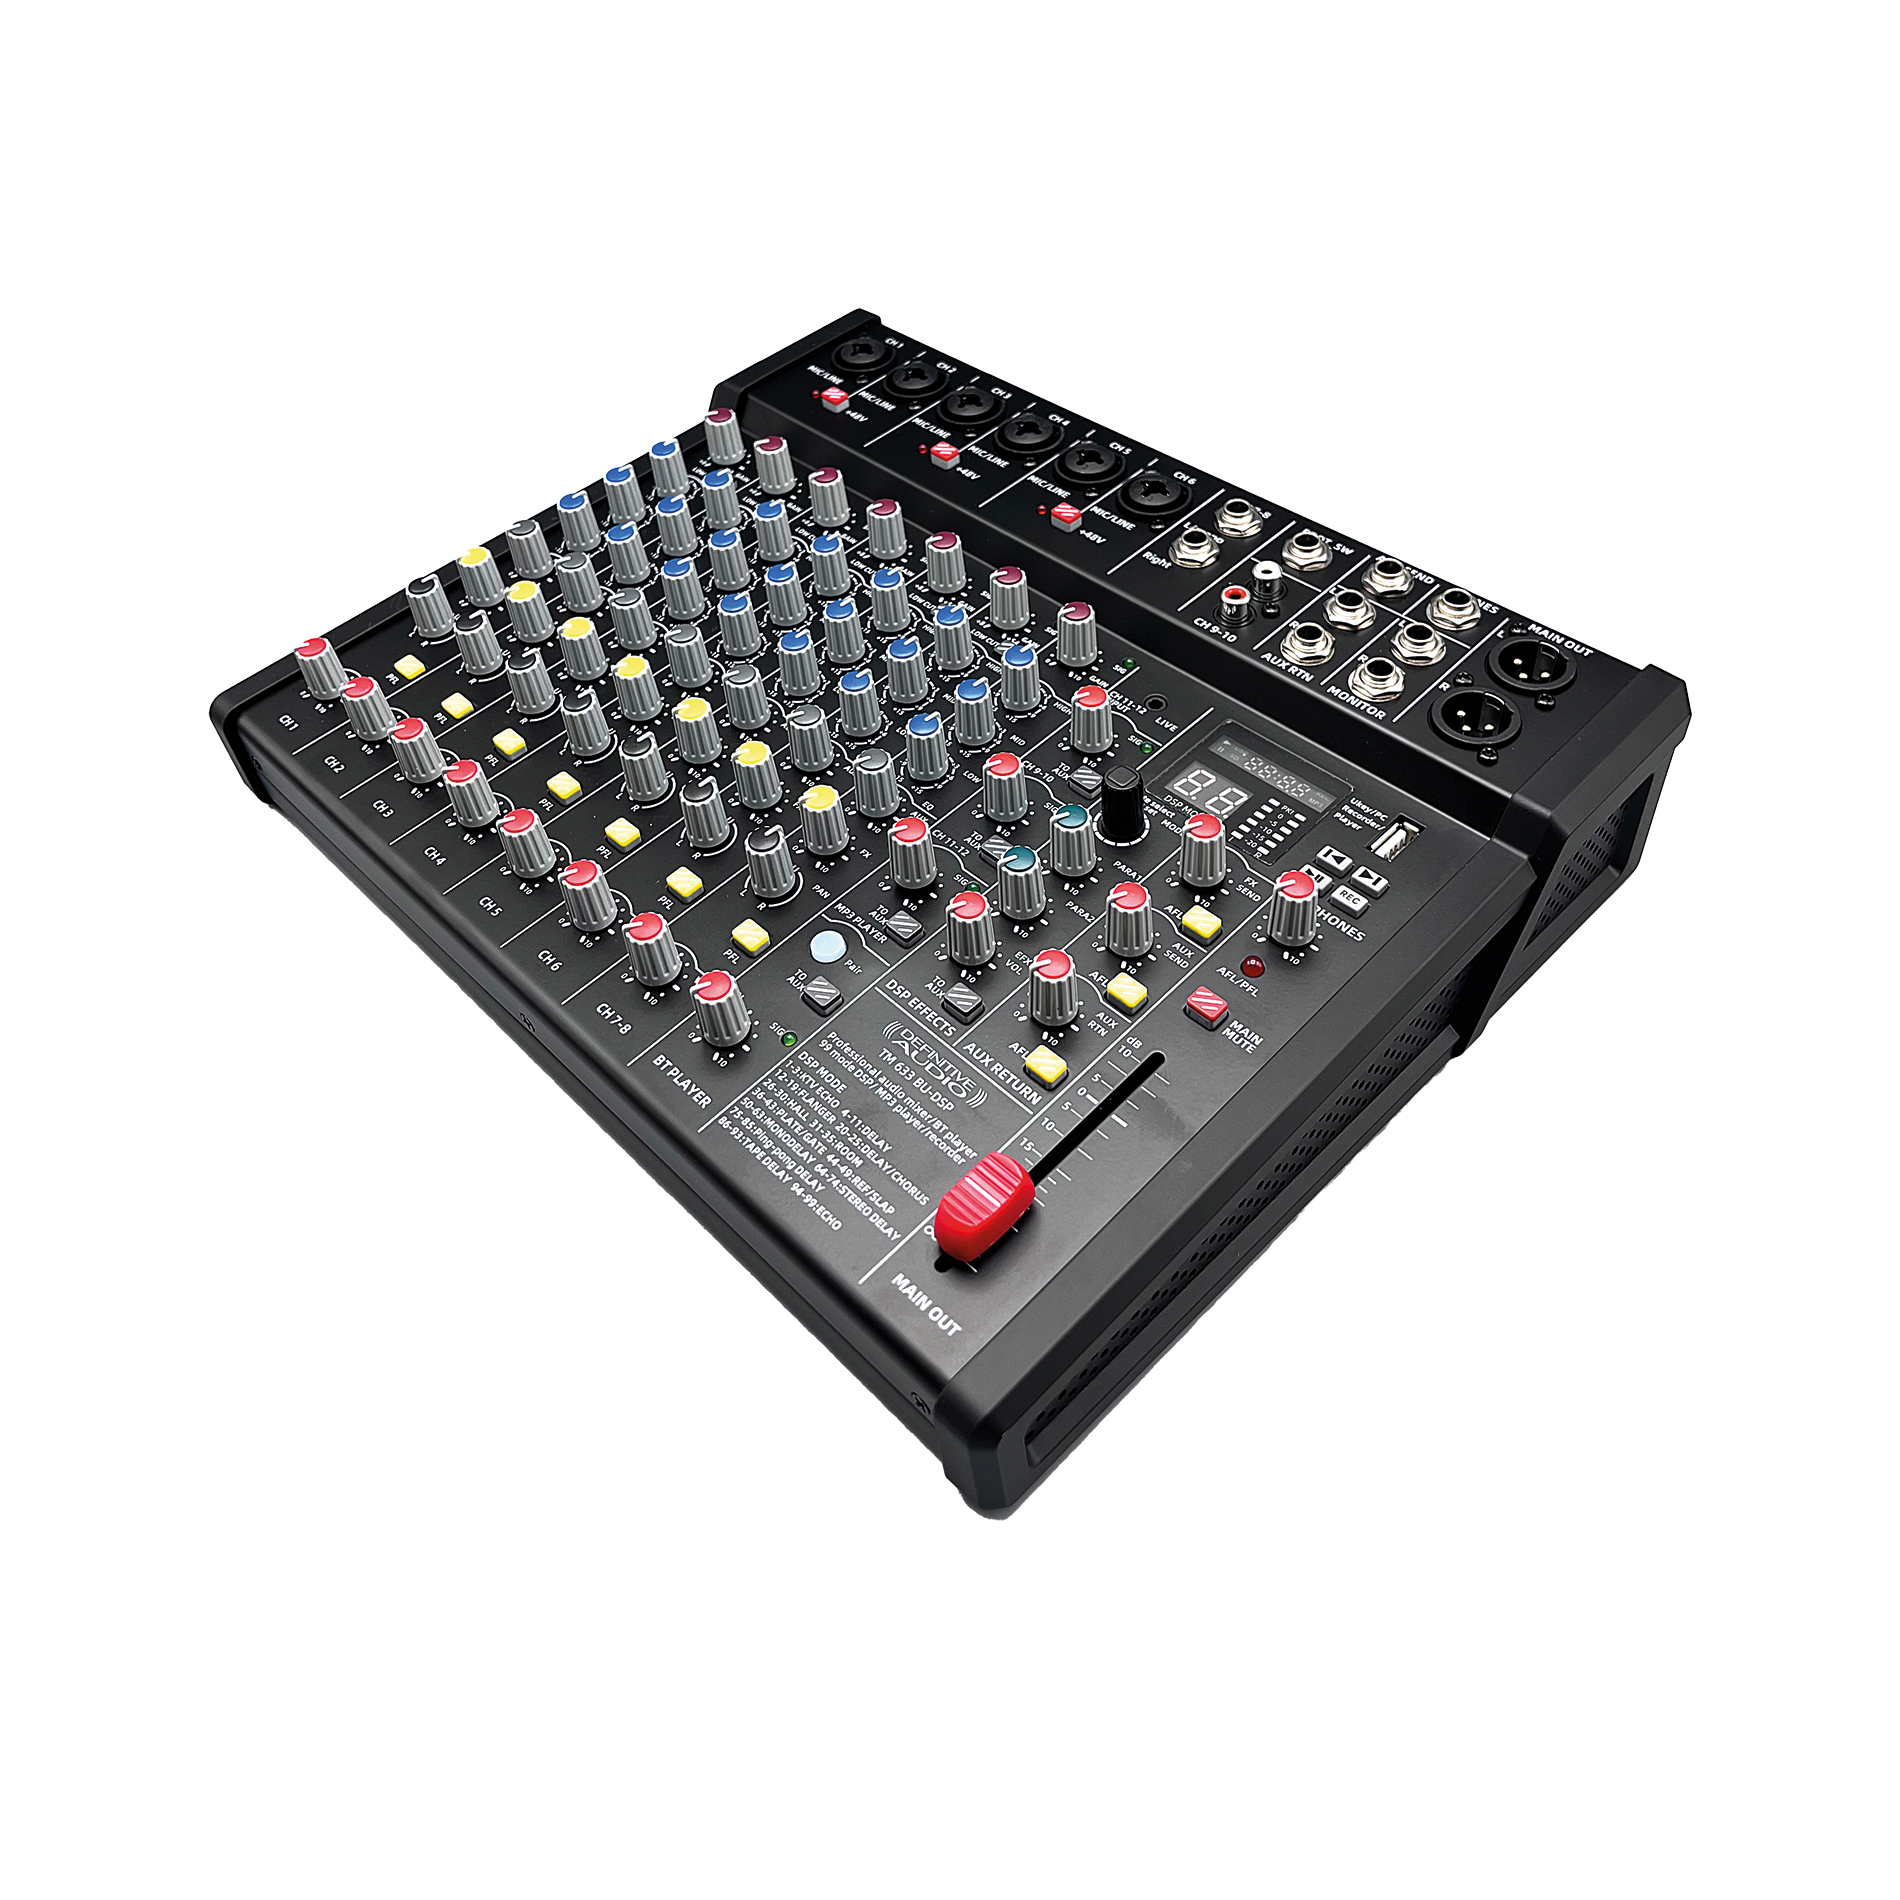 Definitive Audio Tm 633 Bu-dsp - Mesa de mezcla analógica - Variation 3